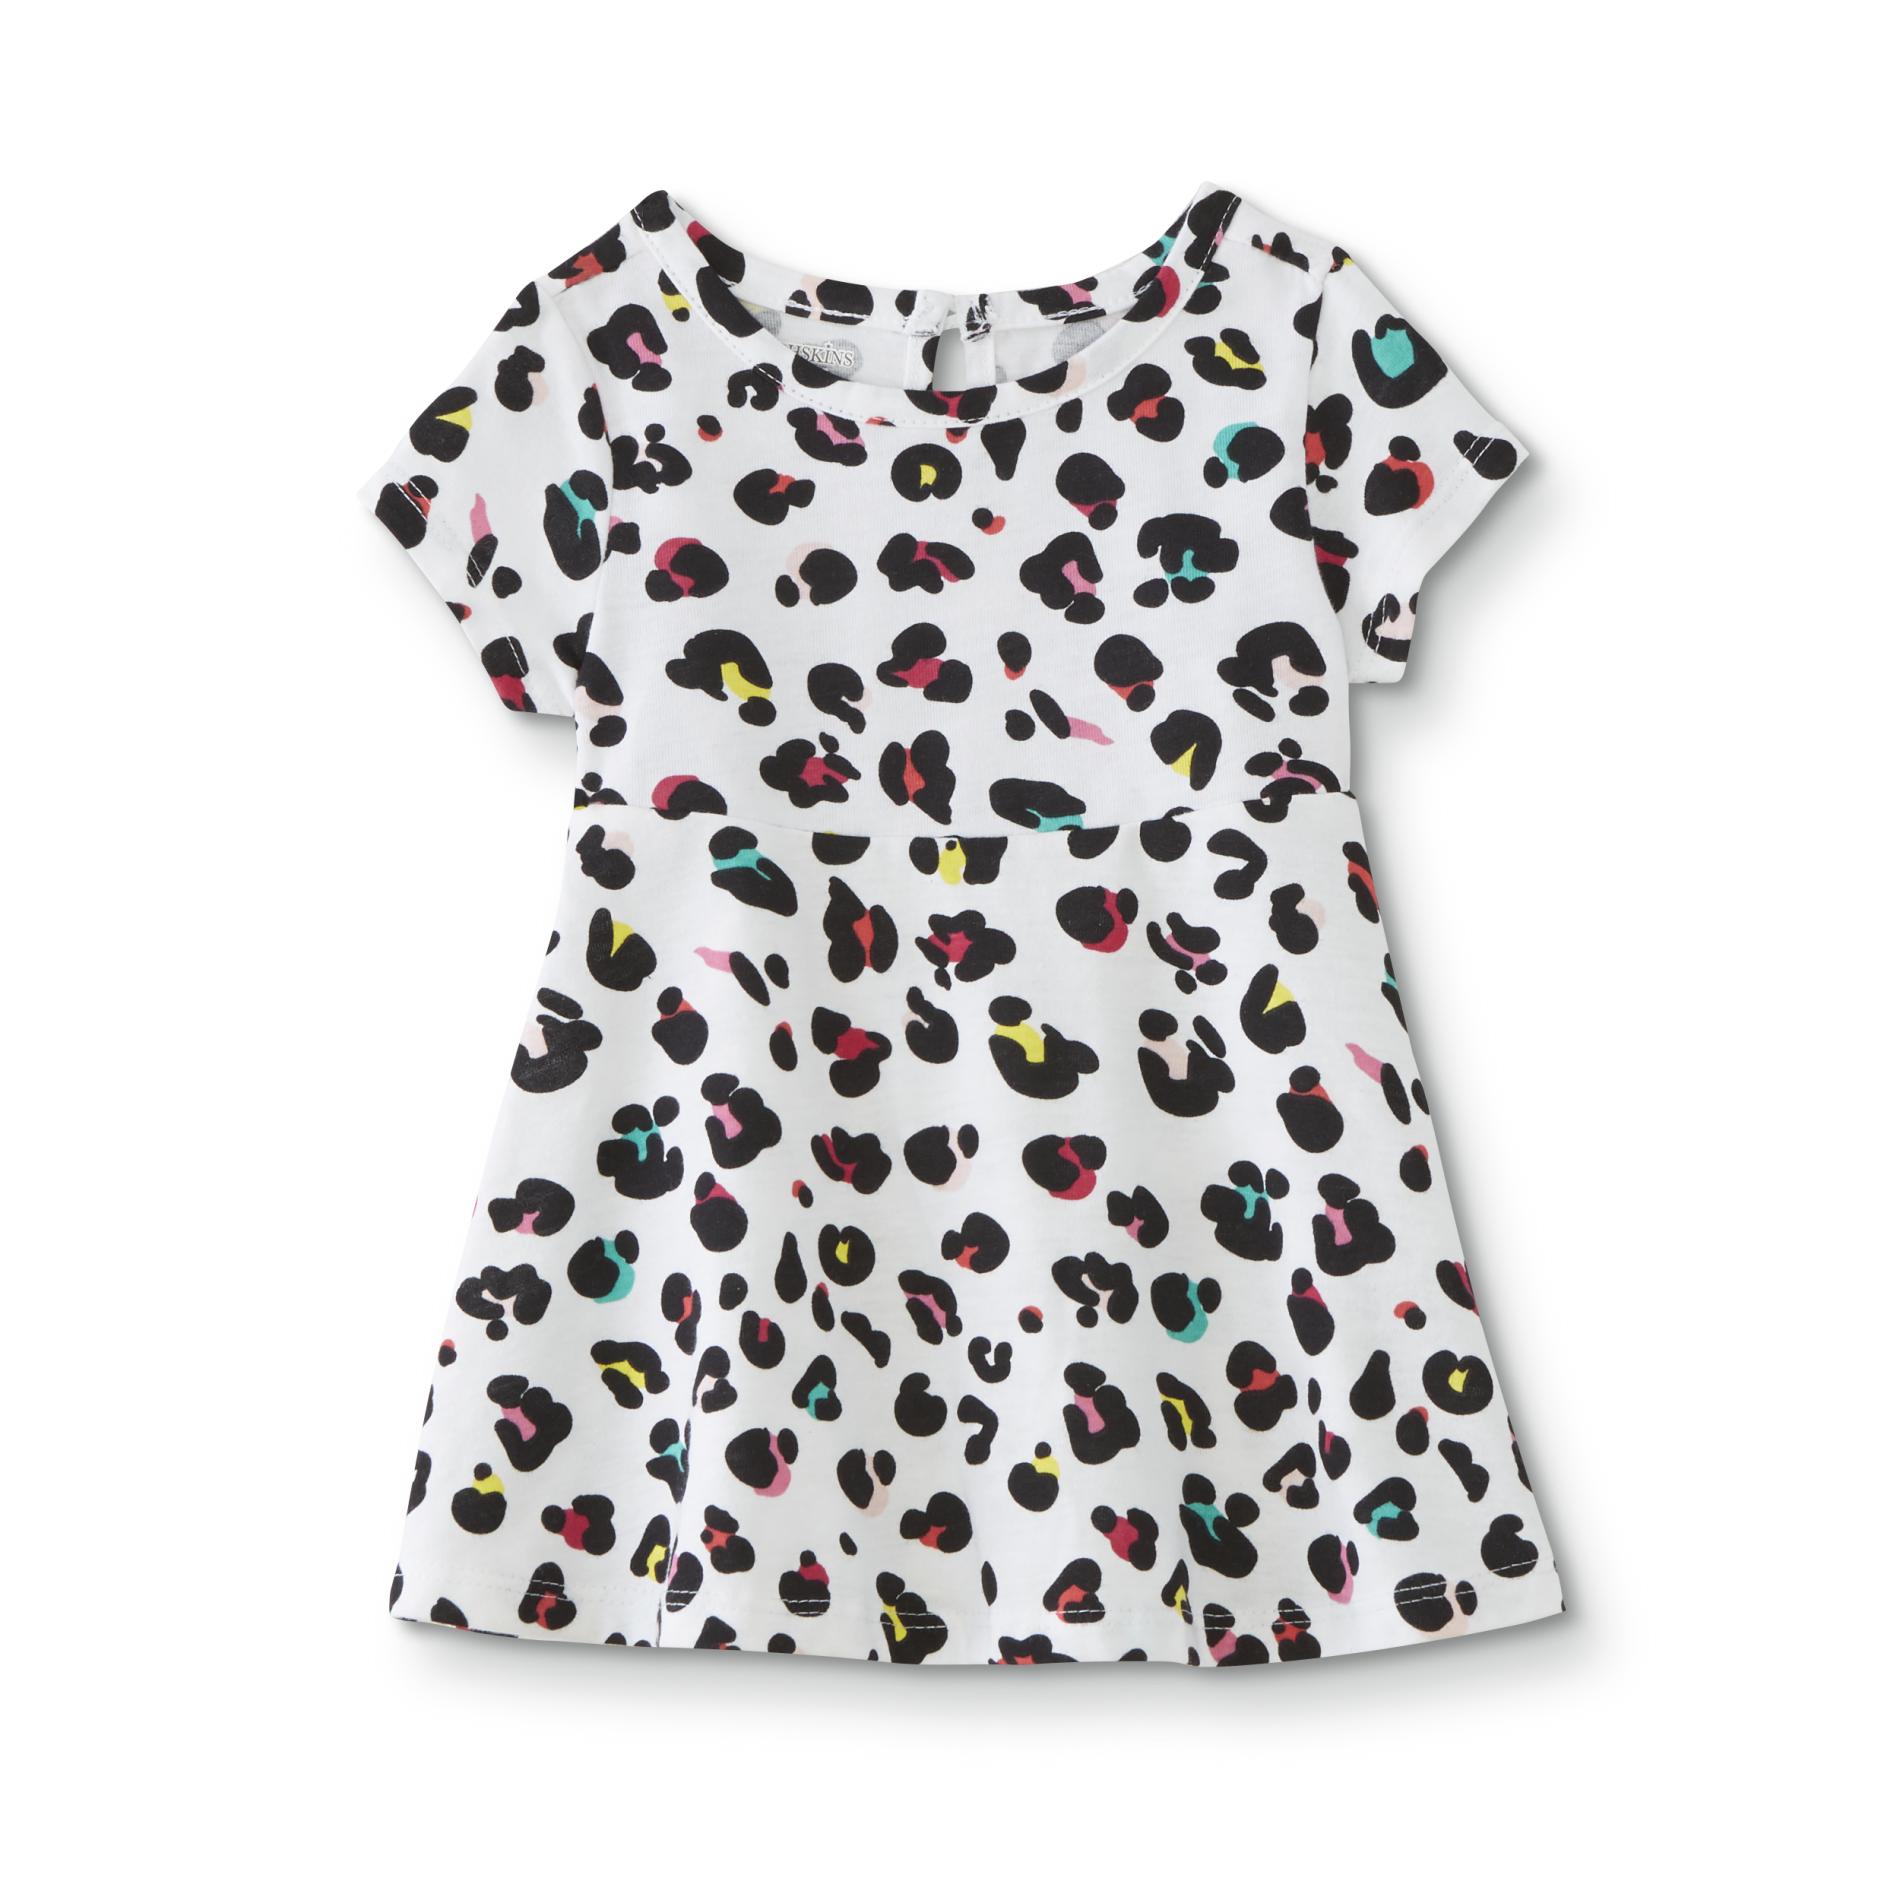 Toughskins Infant & Toddler Girls' Skater Dress - Leopard Print